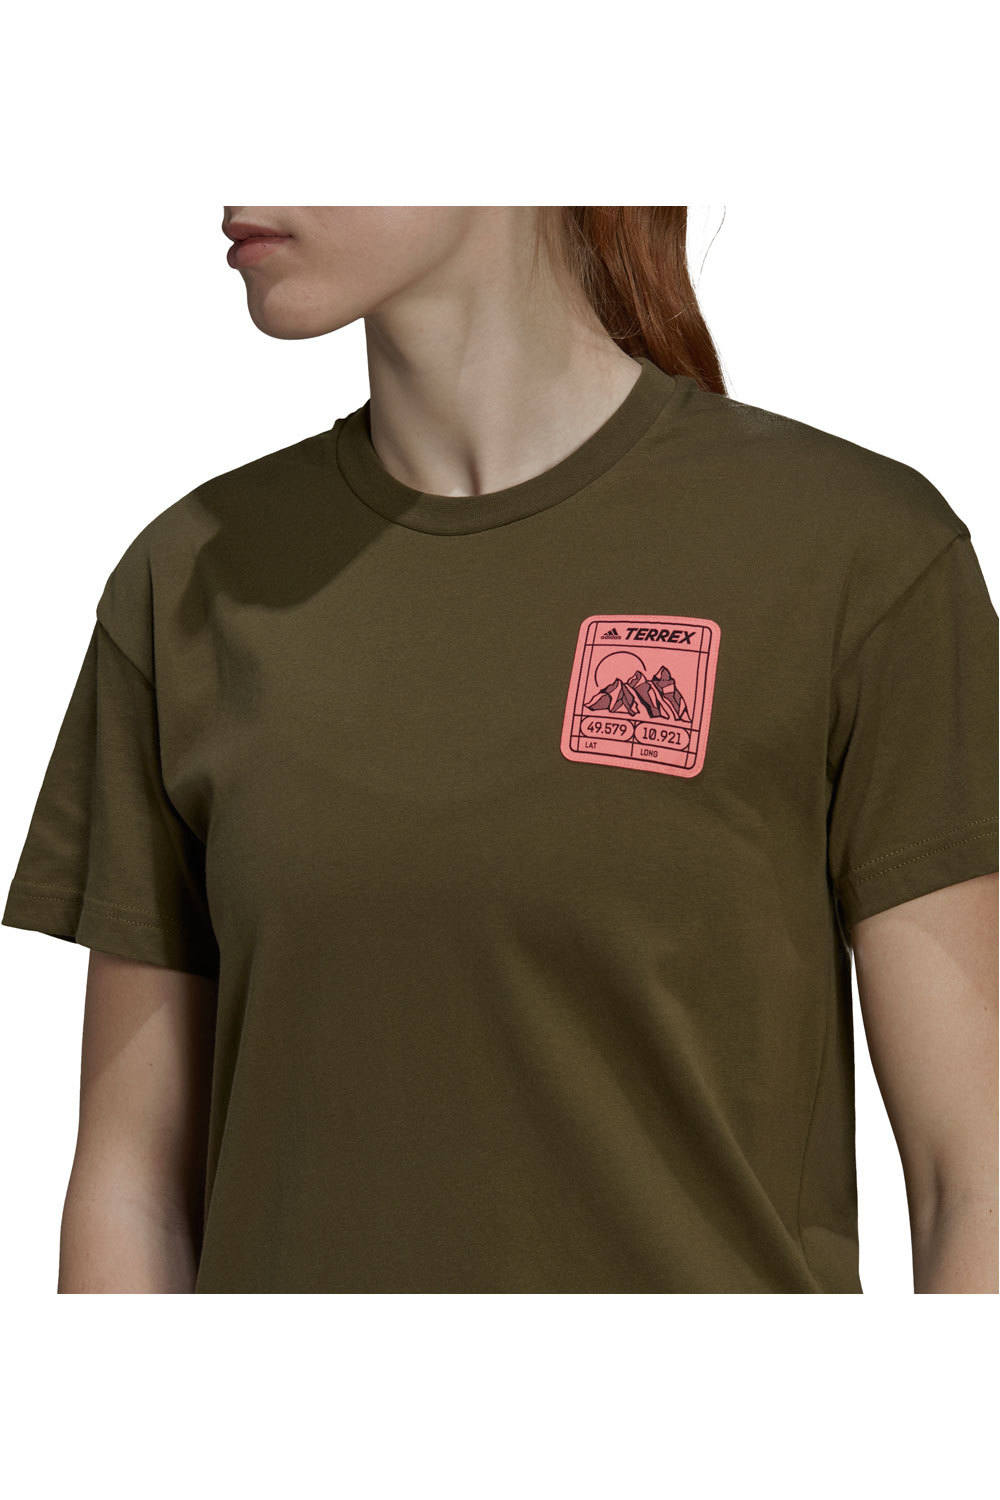 adidas camiseta montaña manga corta mujer Terrex Patch Mountain Graphic vista detalle